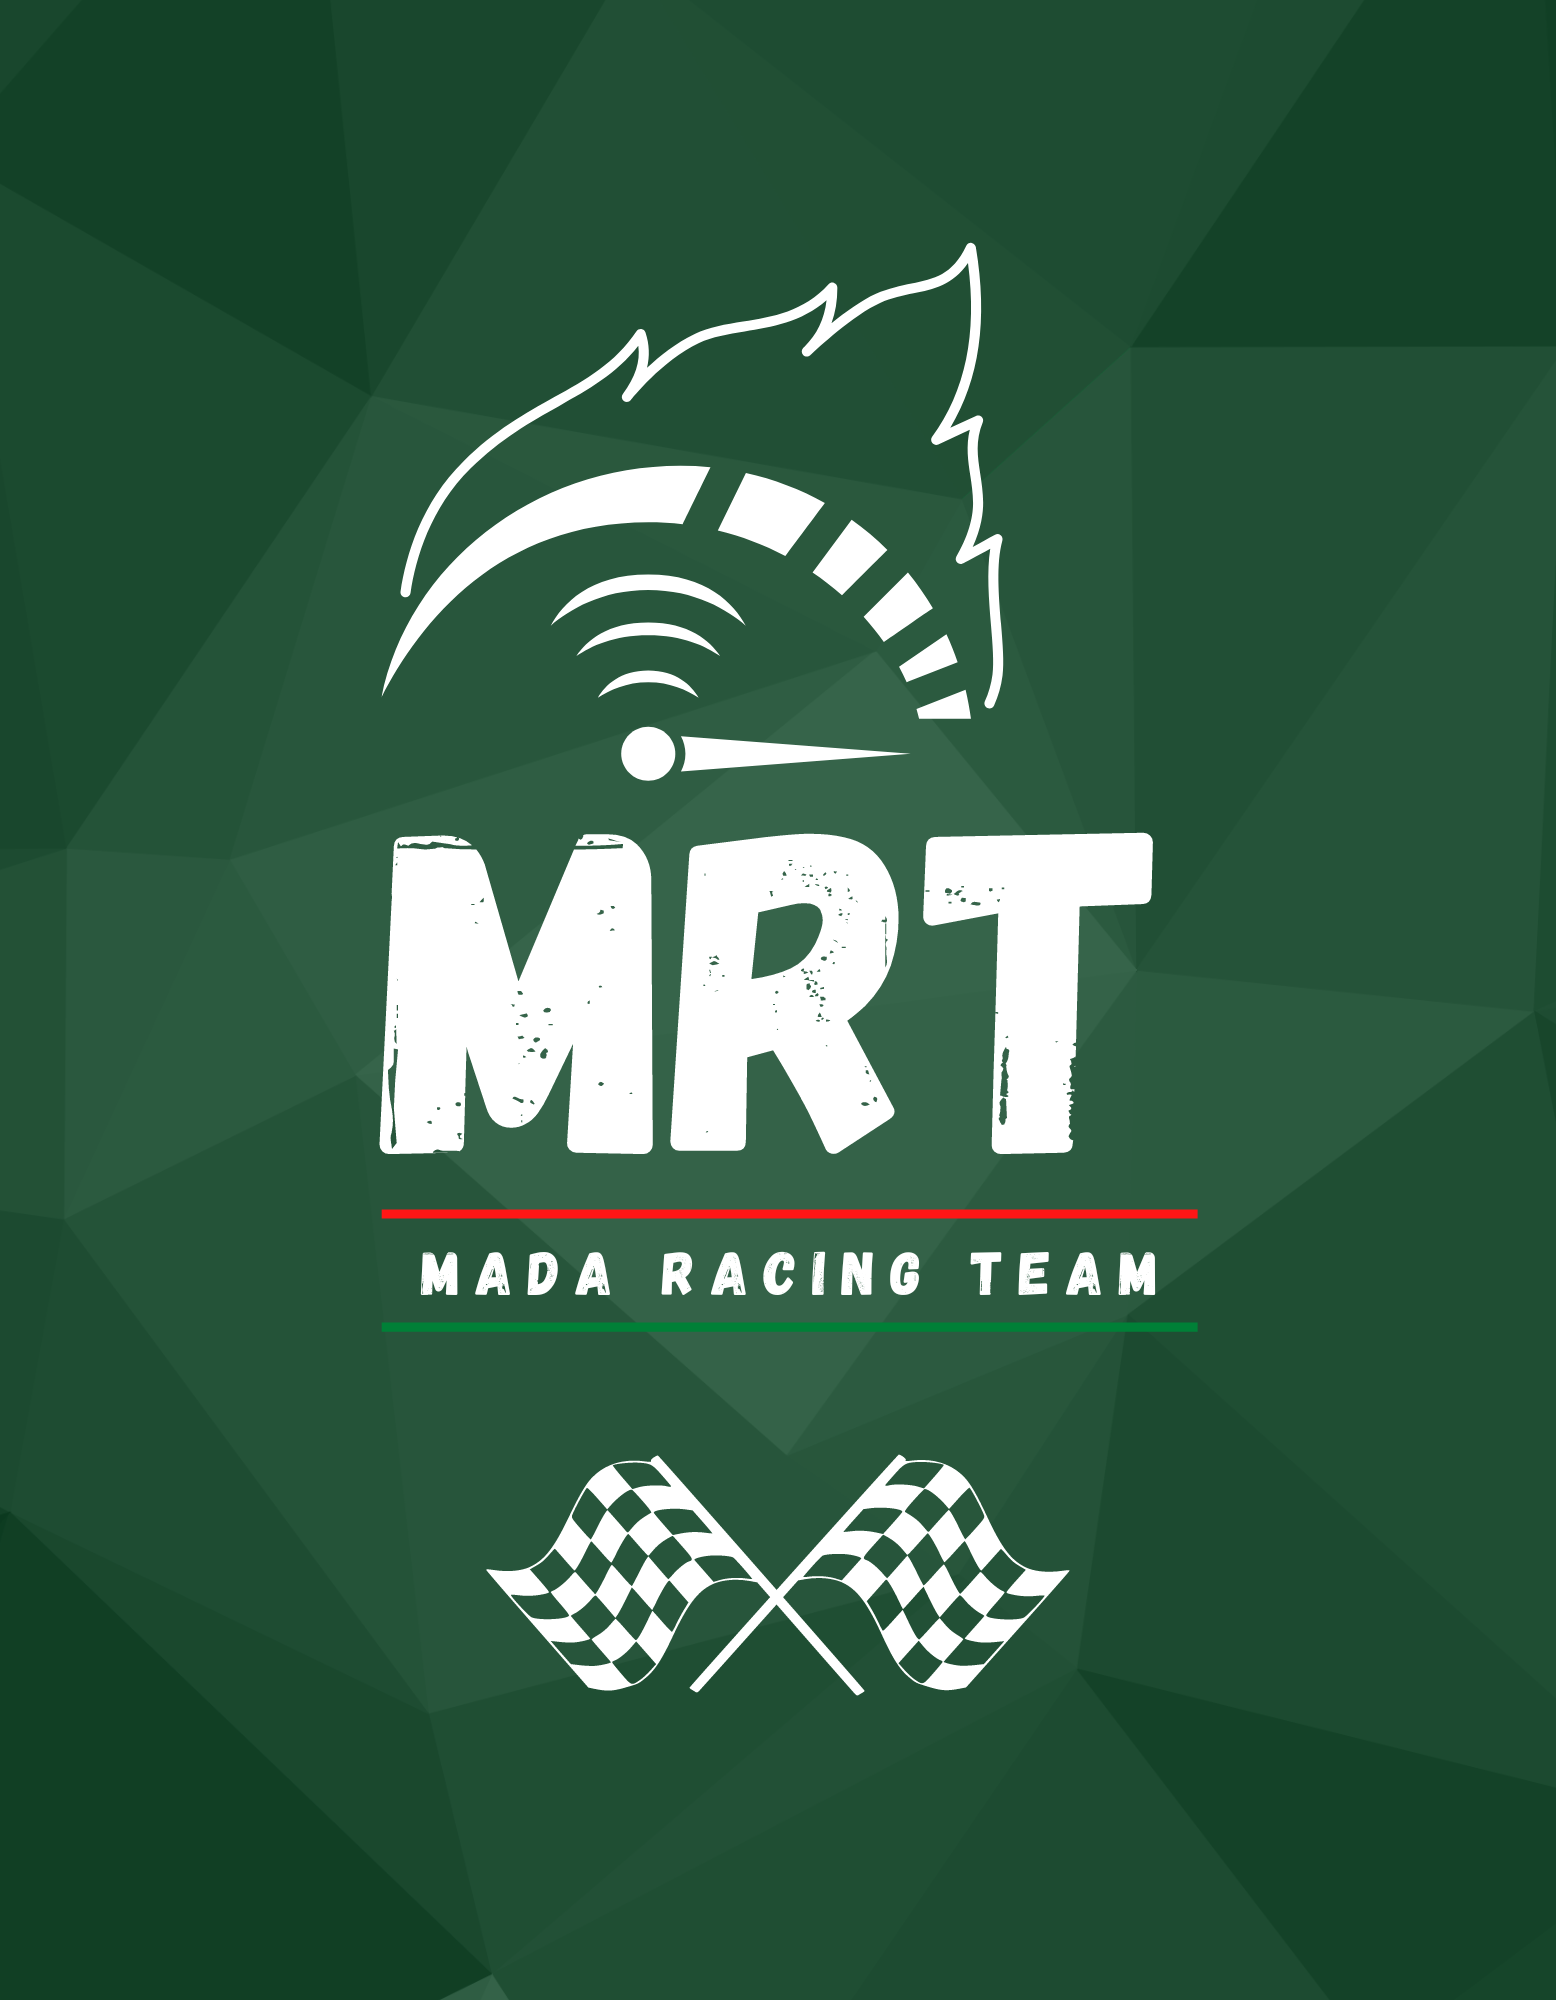 Mada Racing Team